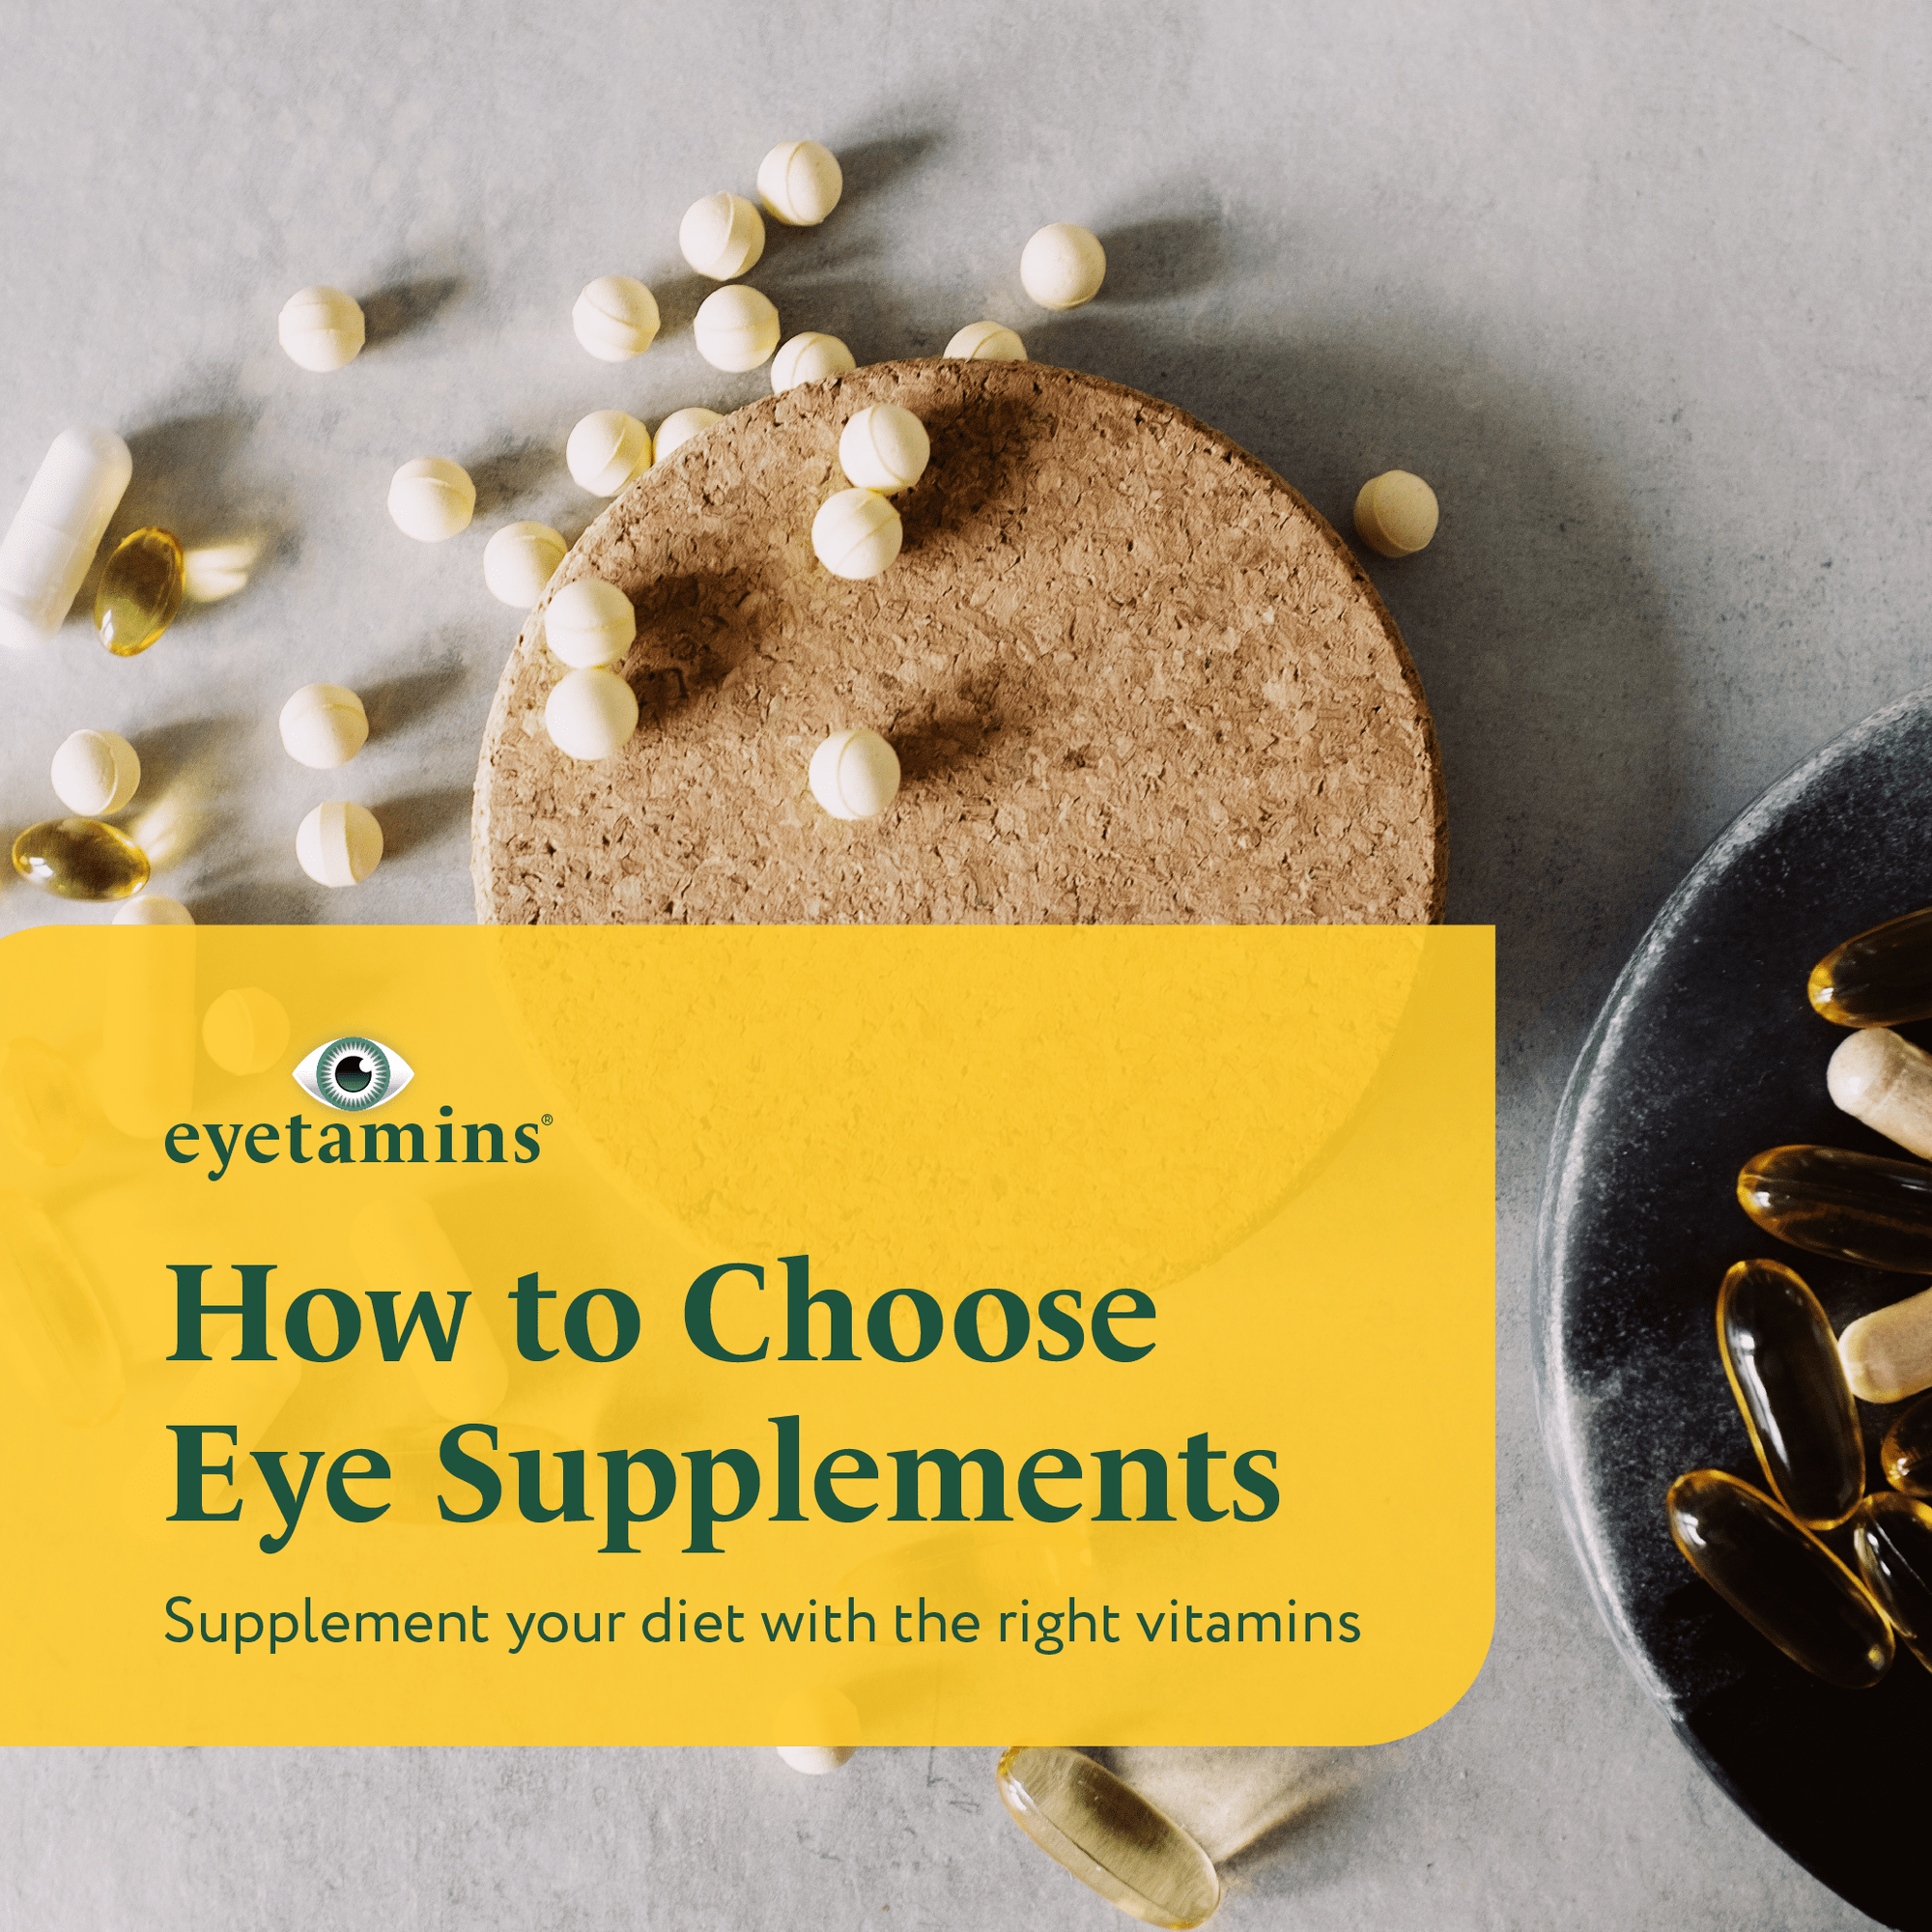 Eyetamins - How to Choose Eye Supplements